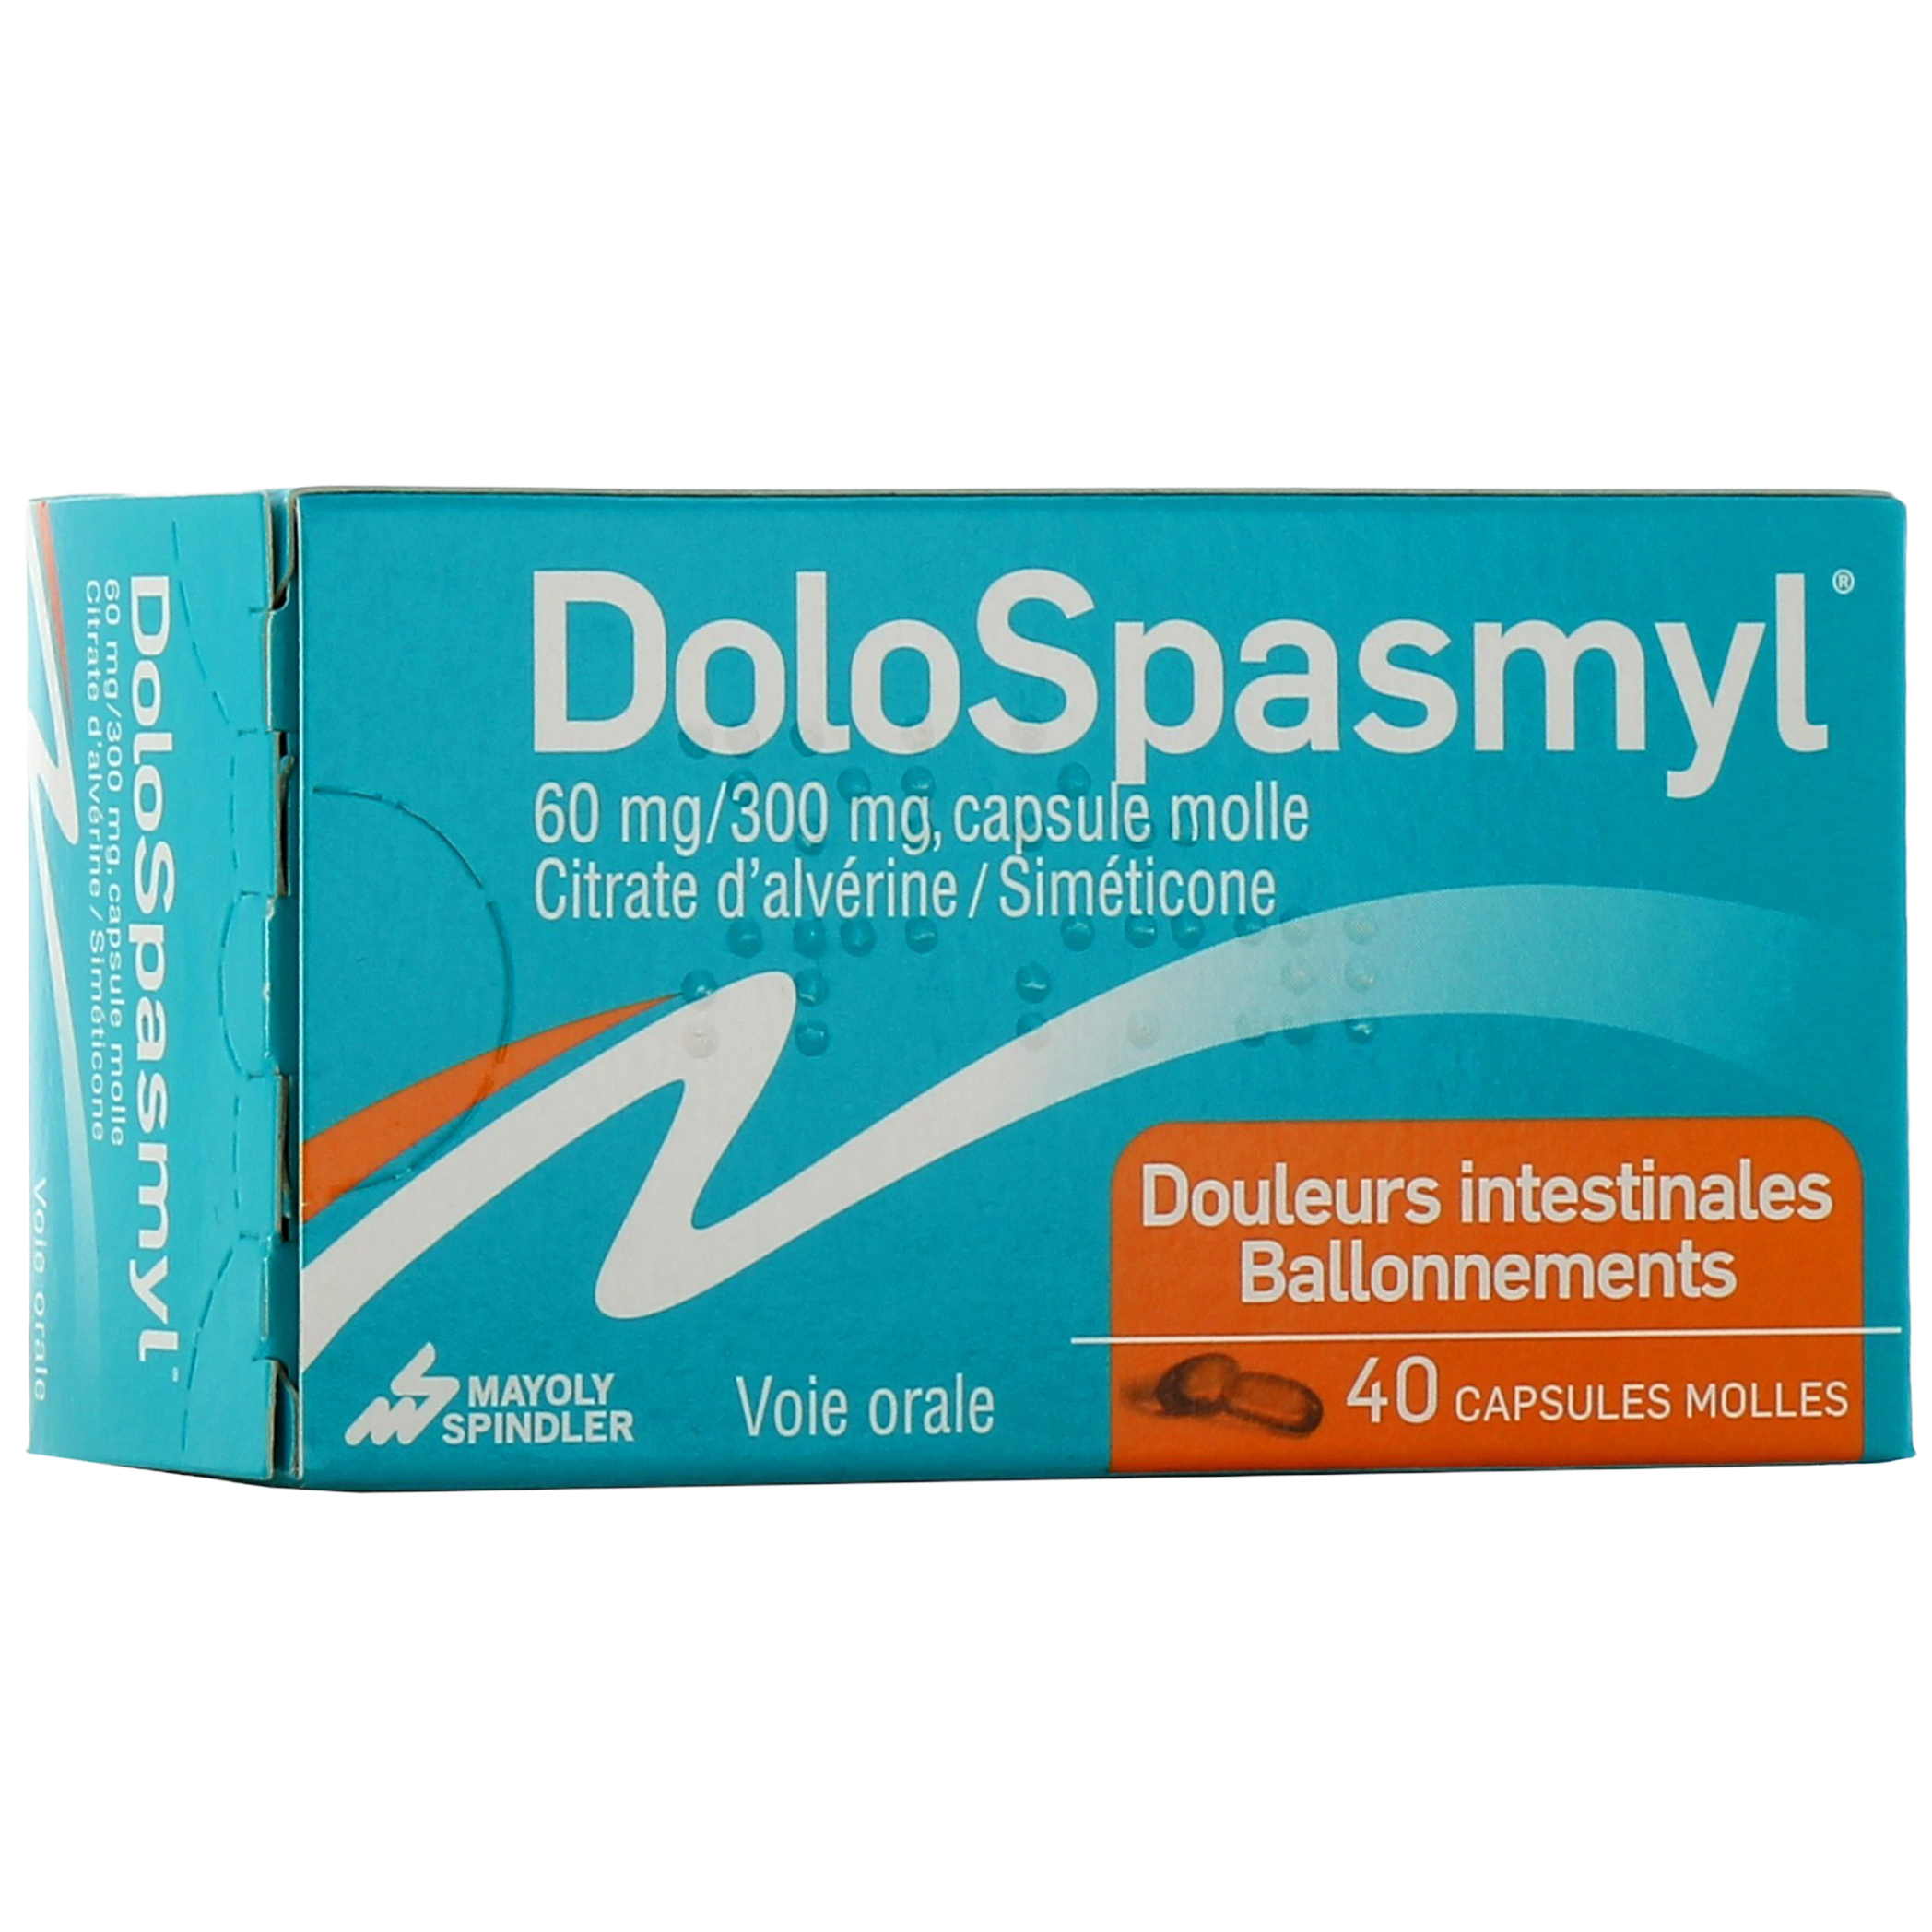 DoloSpasmyl 60 mg/300 mg capsules molles - Spasmes intestinaux ...